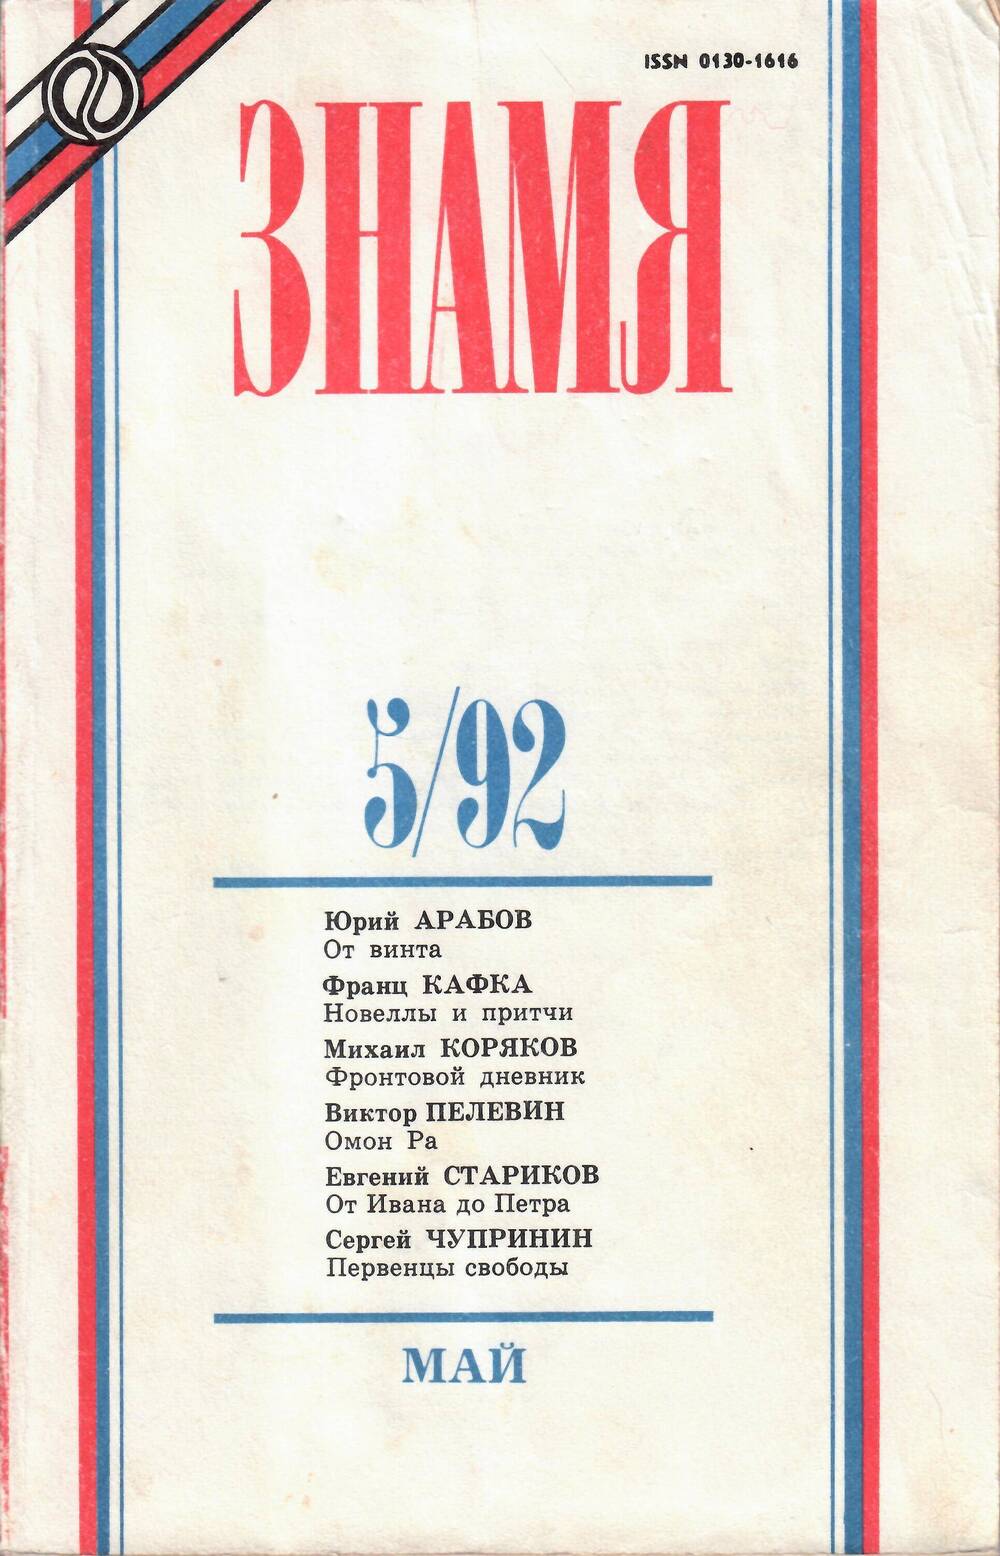 Журнал Знамя, № 5, май, 1992 г., изд-во Пресса.